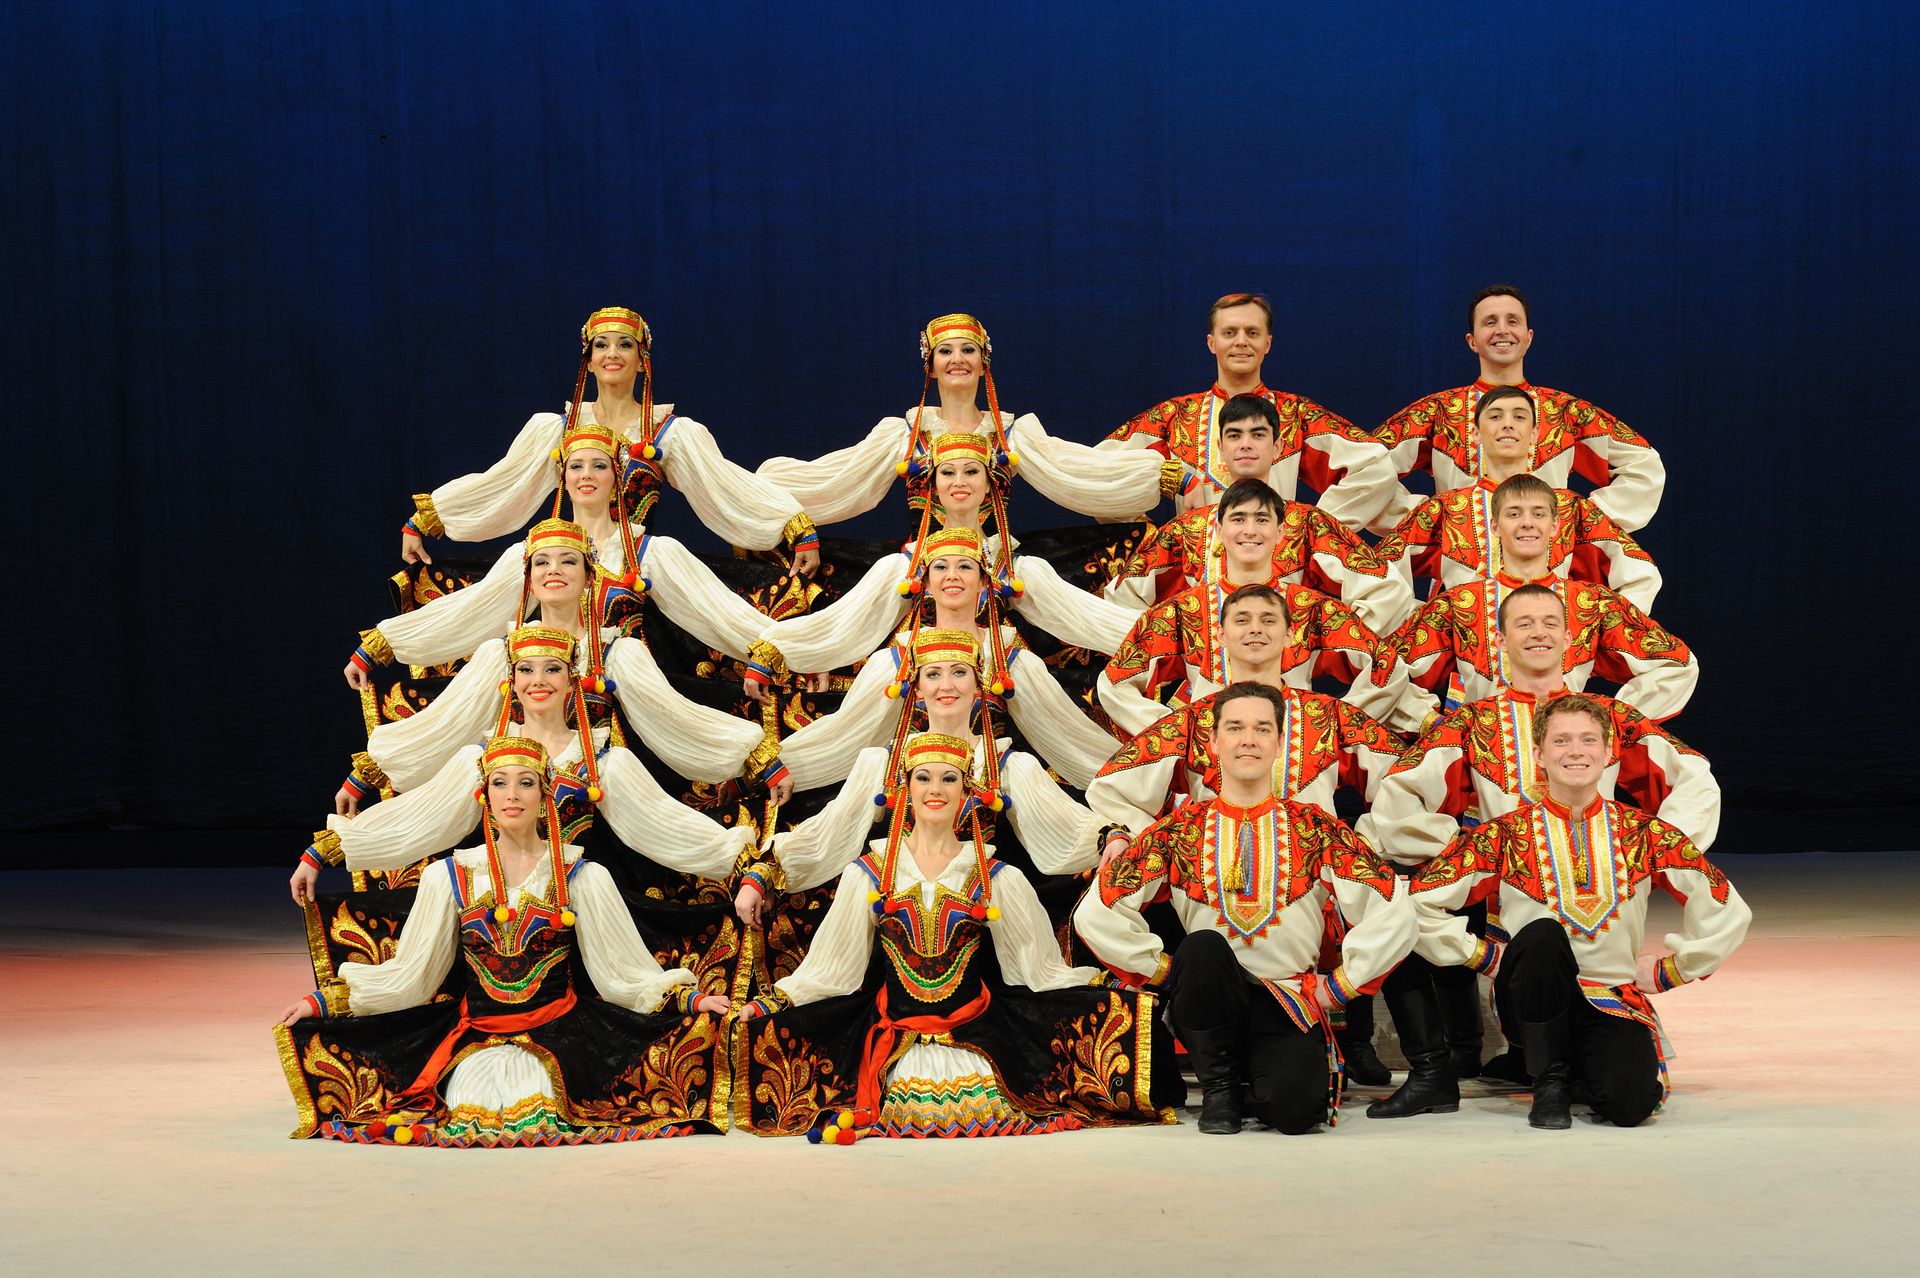 Round dance. Народные танцы. Русский танец. Русско народные танцы. Народные танцы России.